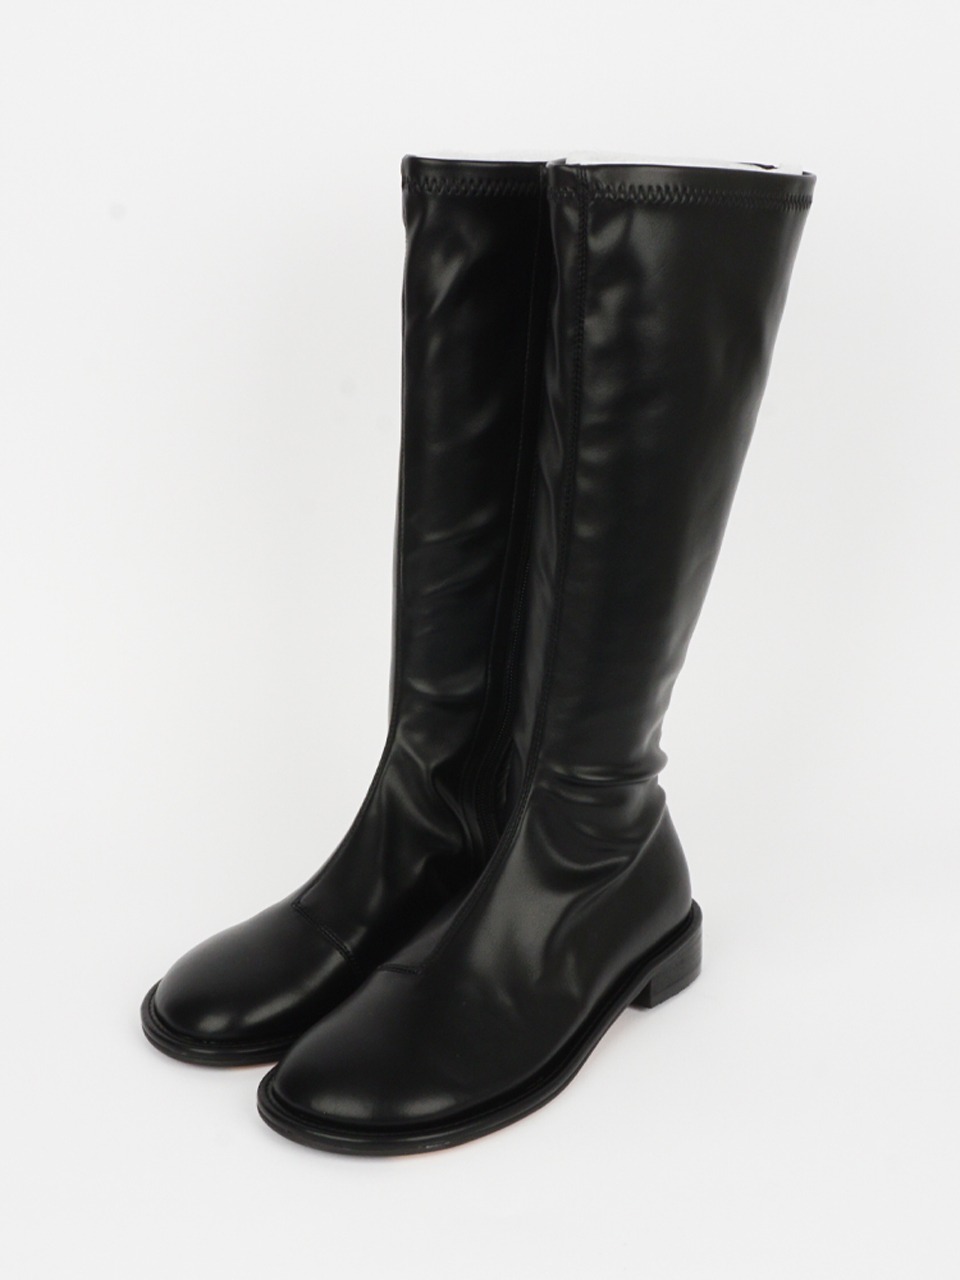 Span long boots (Black)